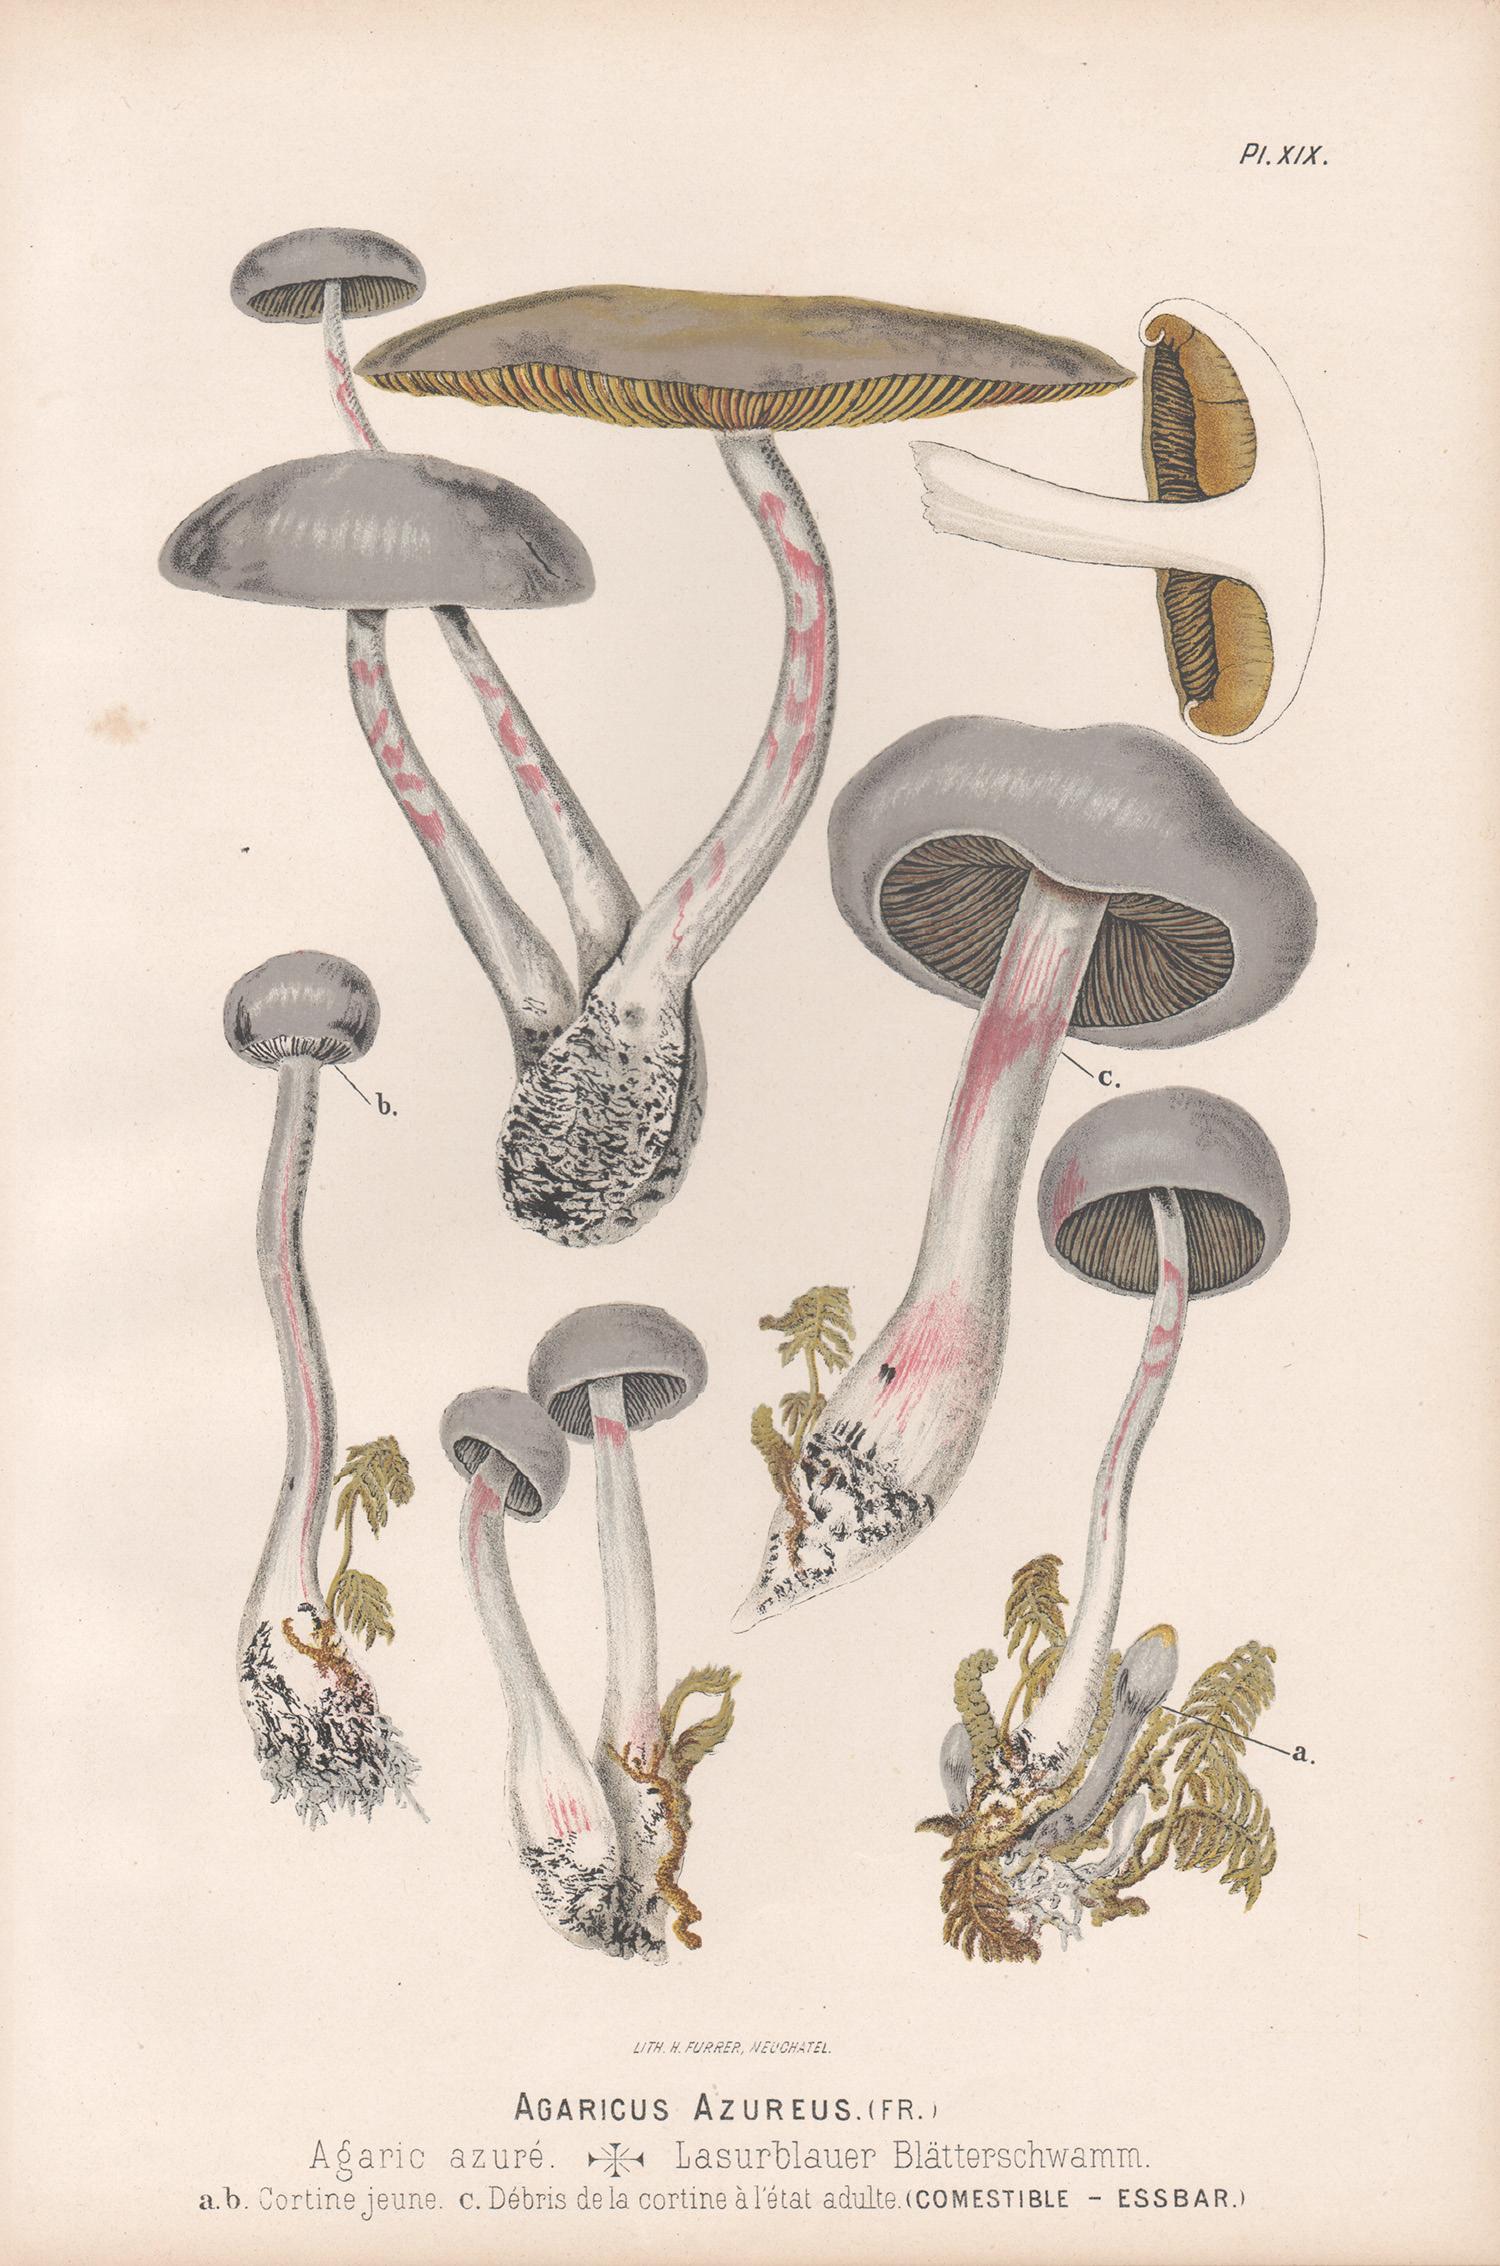 H Furrer after Fritz Leuba Still-Life Print - Agaricus Azureus, Leuba antique mushroom fungi botanical chromolithograph print